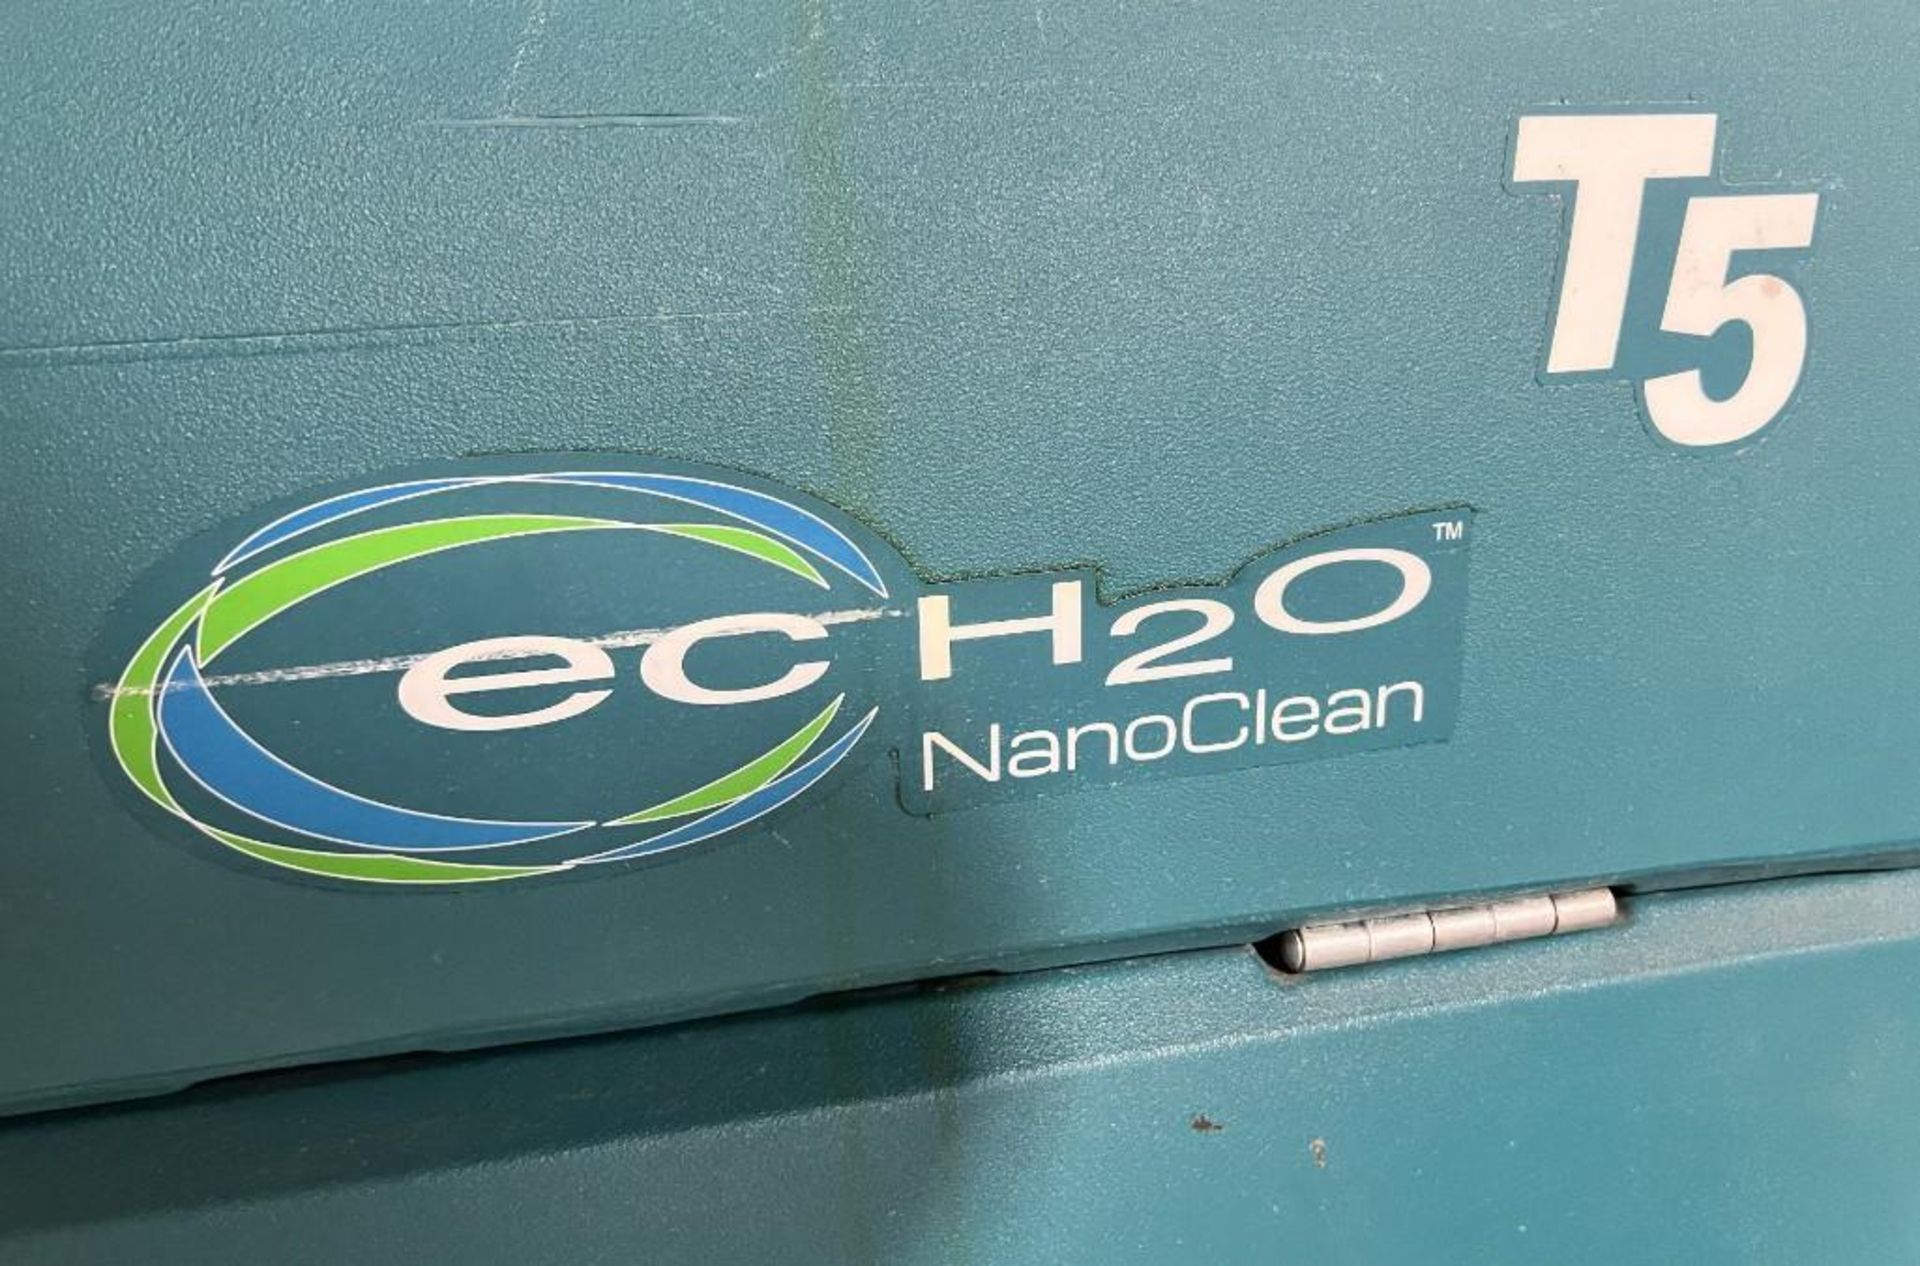 Tennant T5 EC H2O NanoClean Walk Behind Scrubber. - Image 8 of 9